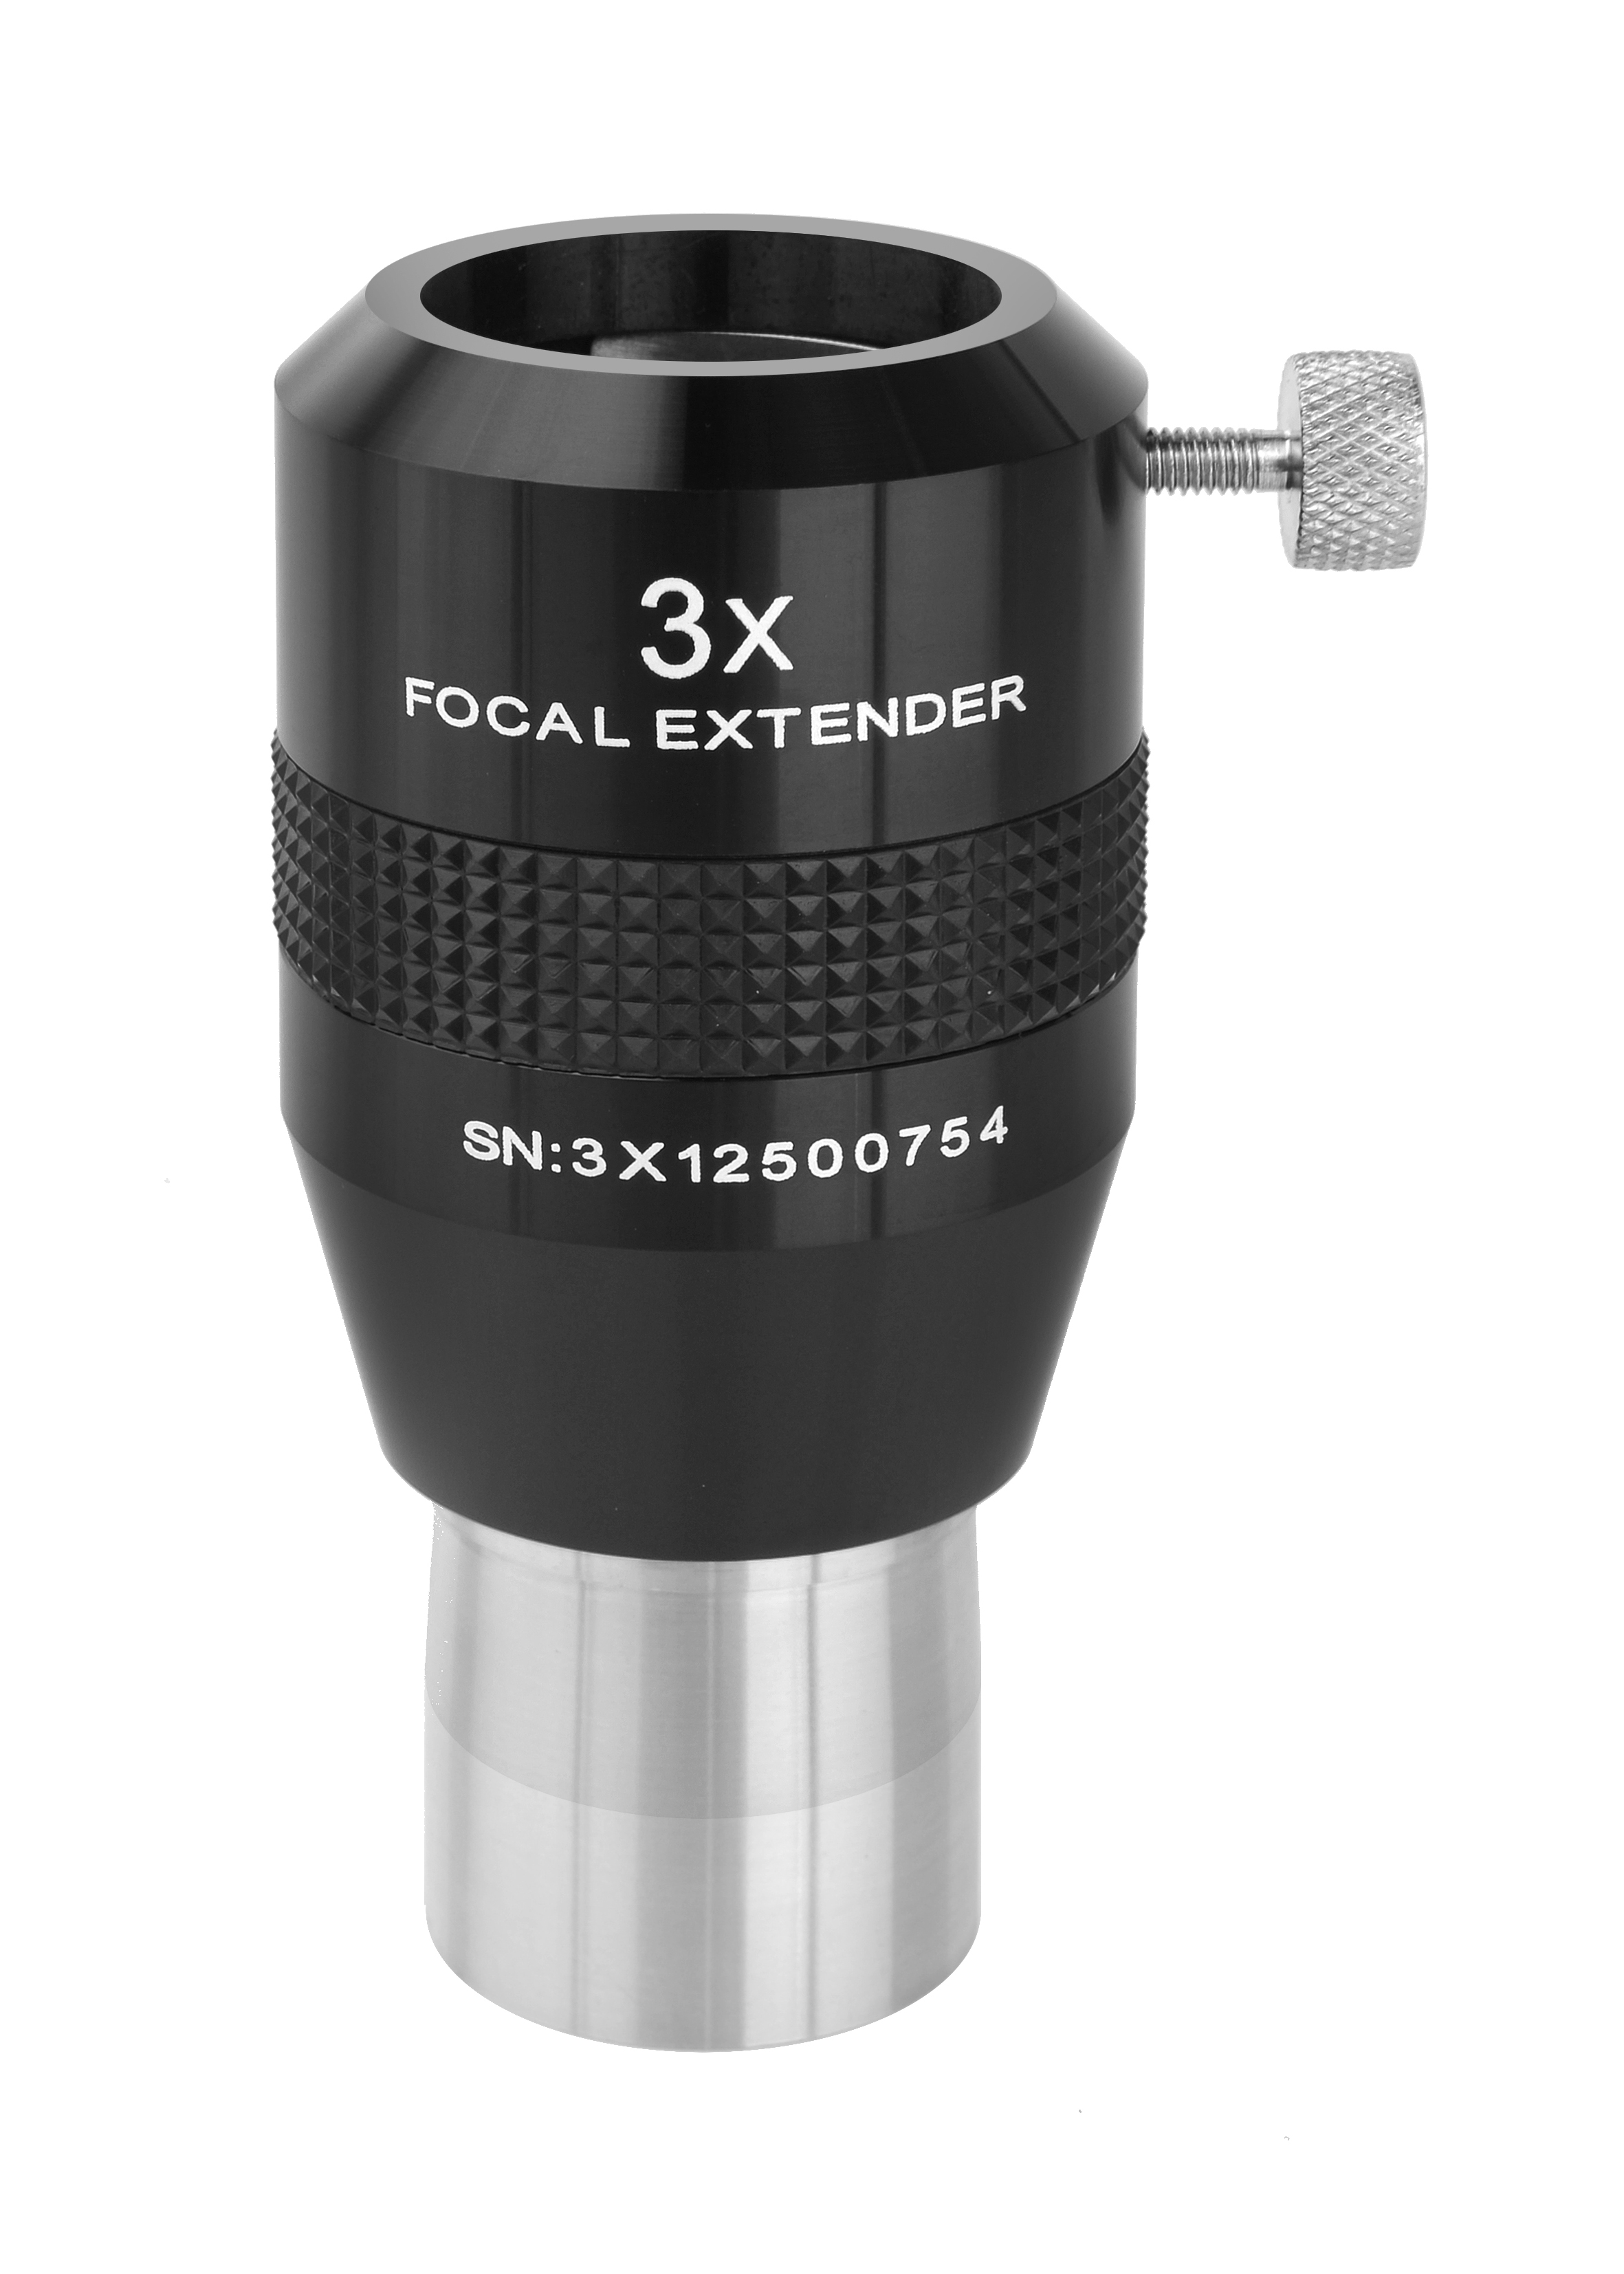 EXPLORE SCIENTIFIC Fokal Extender 3x 31.7mm/1.25"